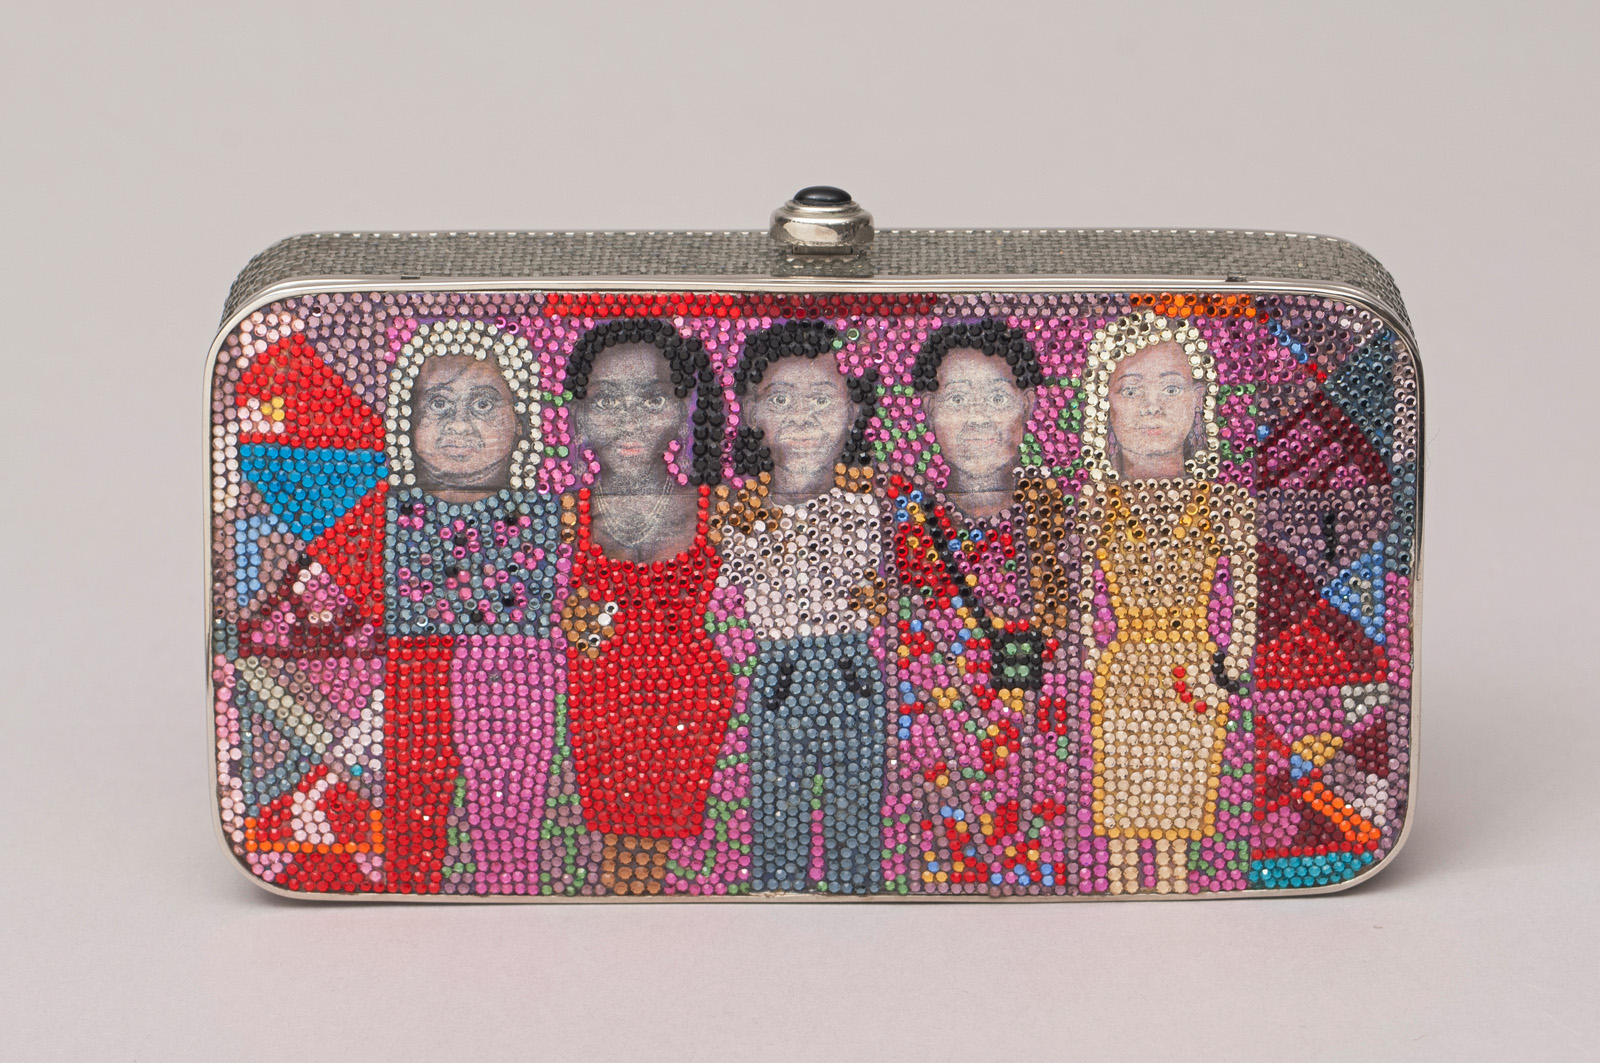 A work of art 💓✨ #handbags #purse #photoshoot #fashion #judithleiber